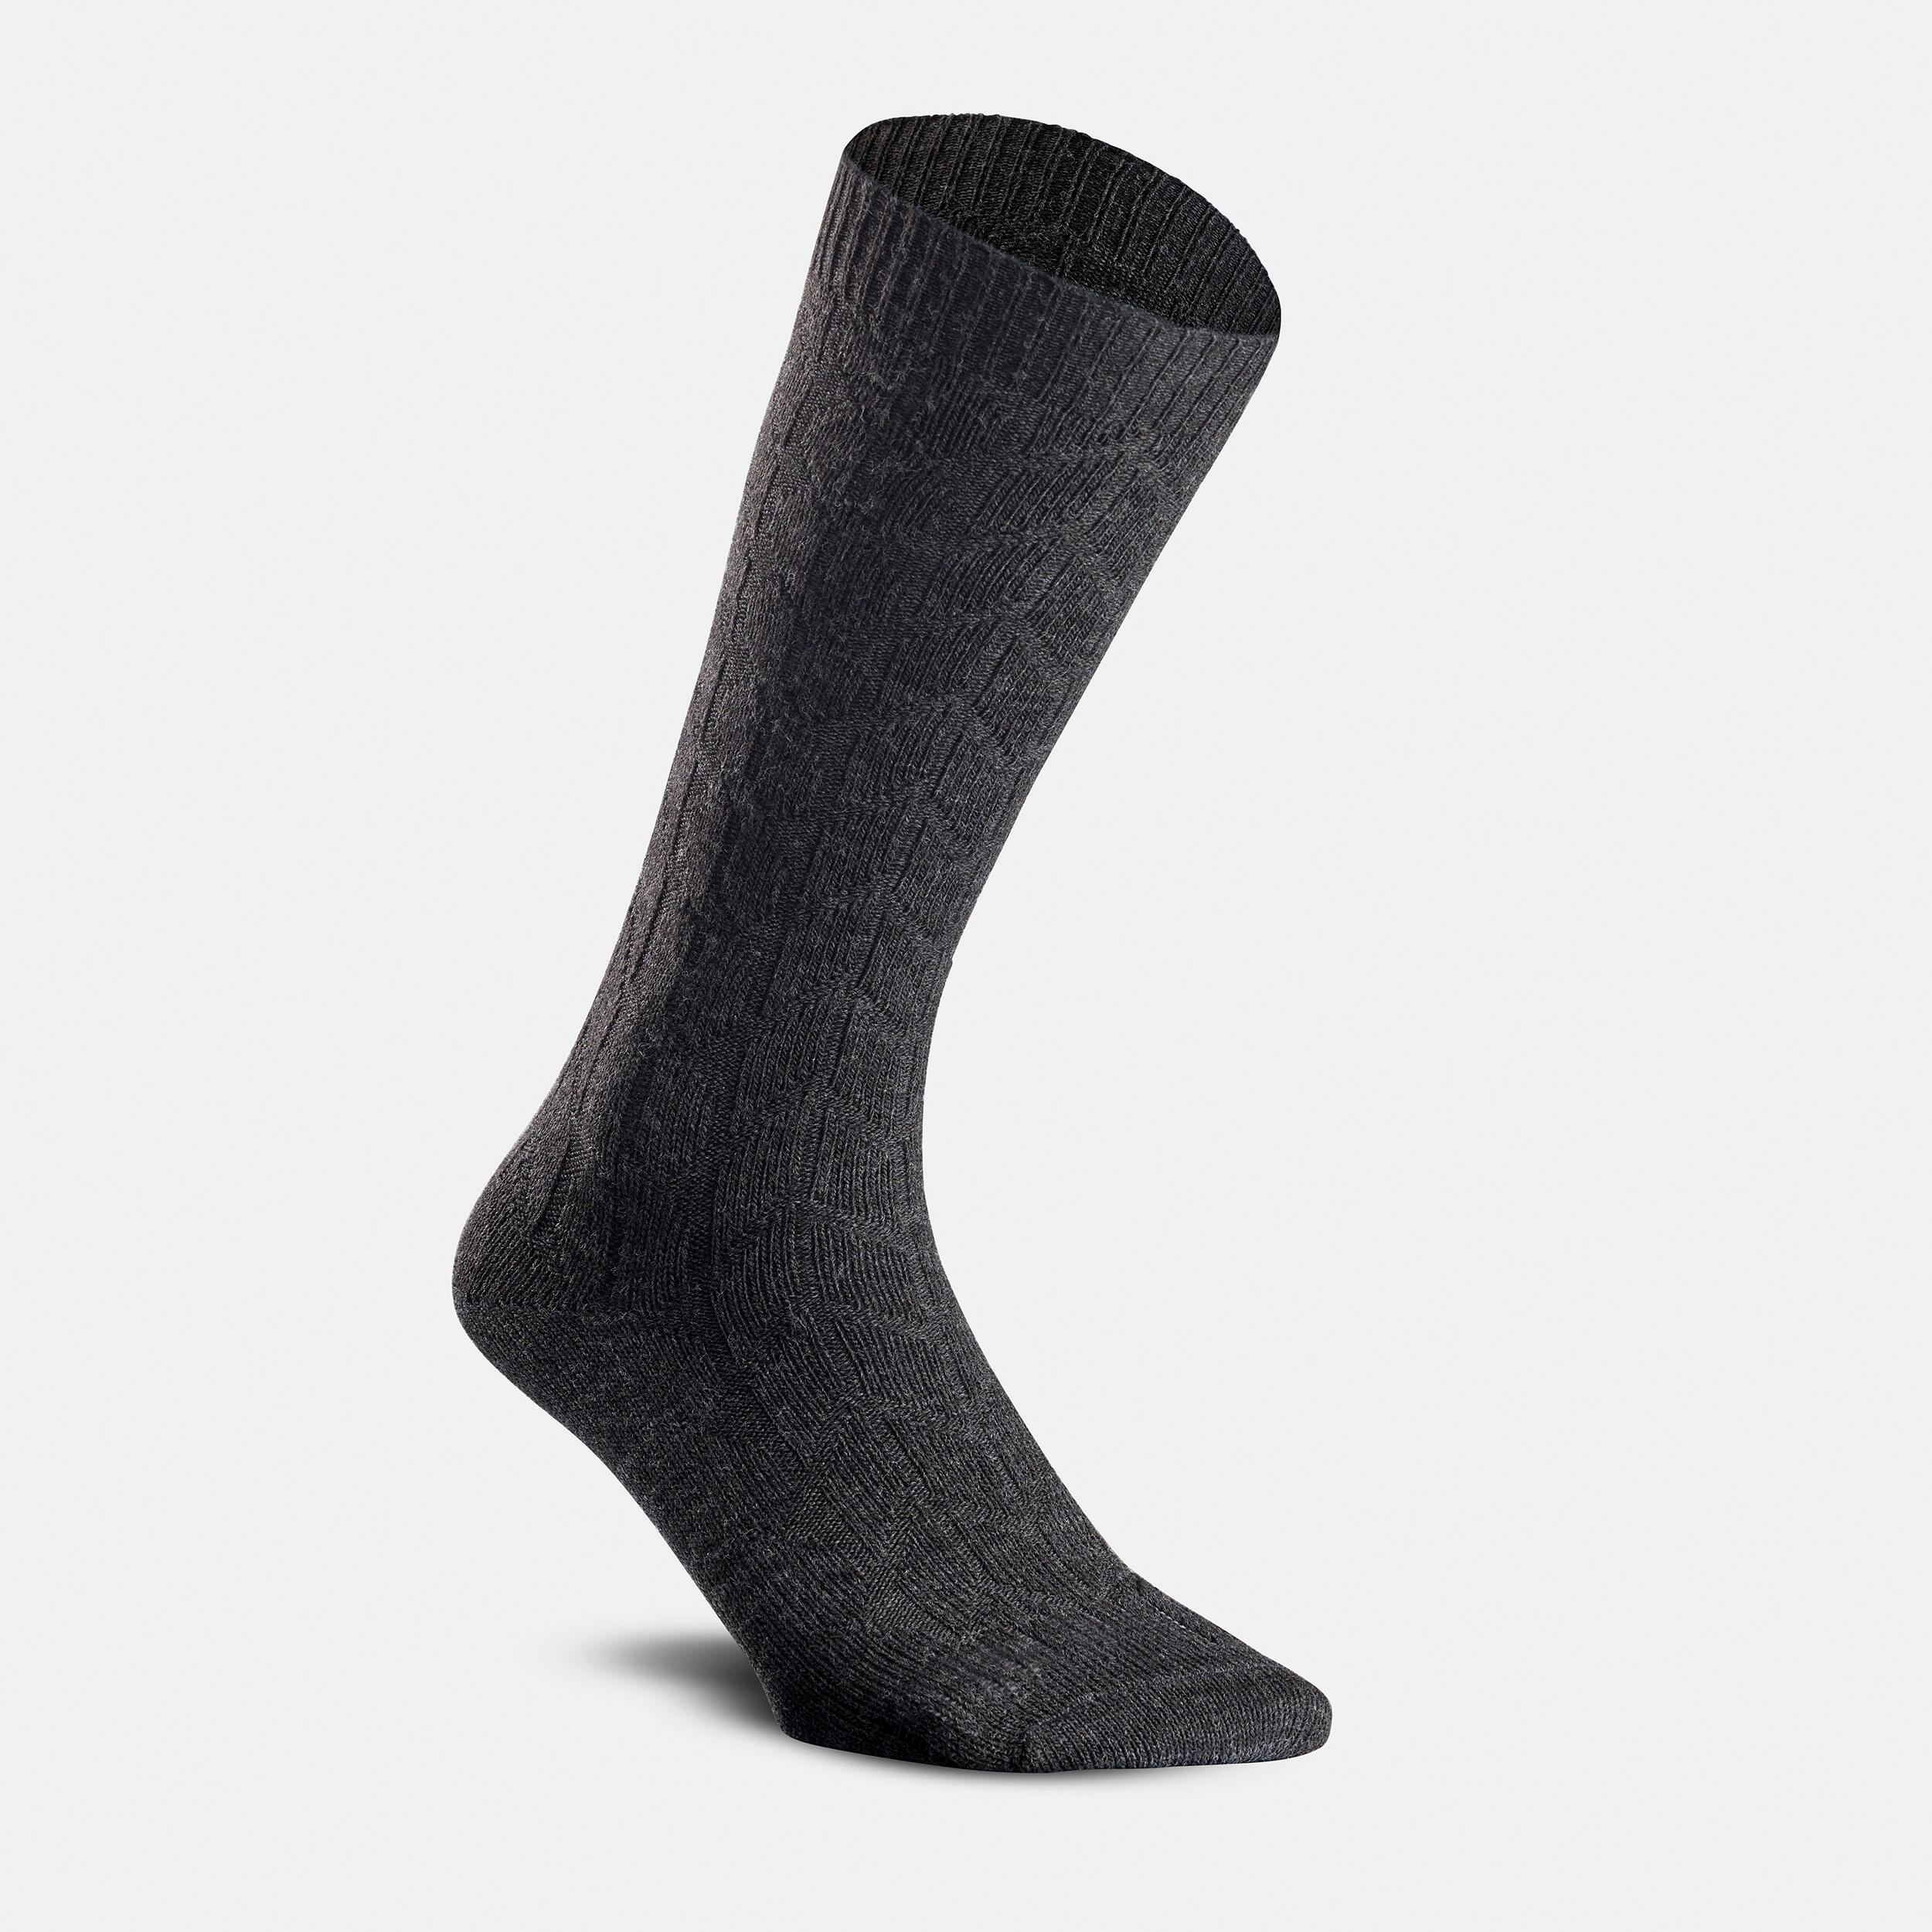 Warm hiking socks - SH100 MID JACQUARD - 2 pairs 10/10